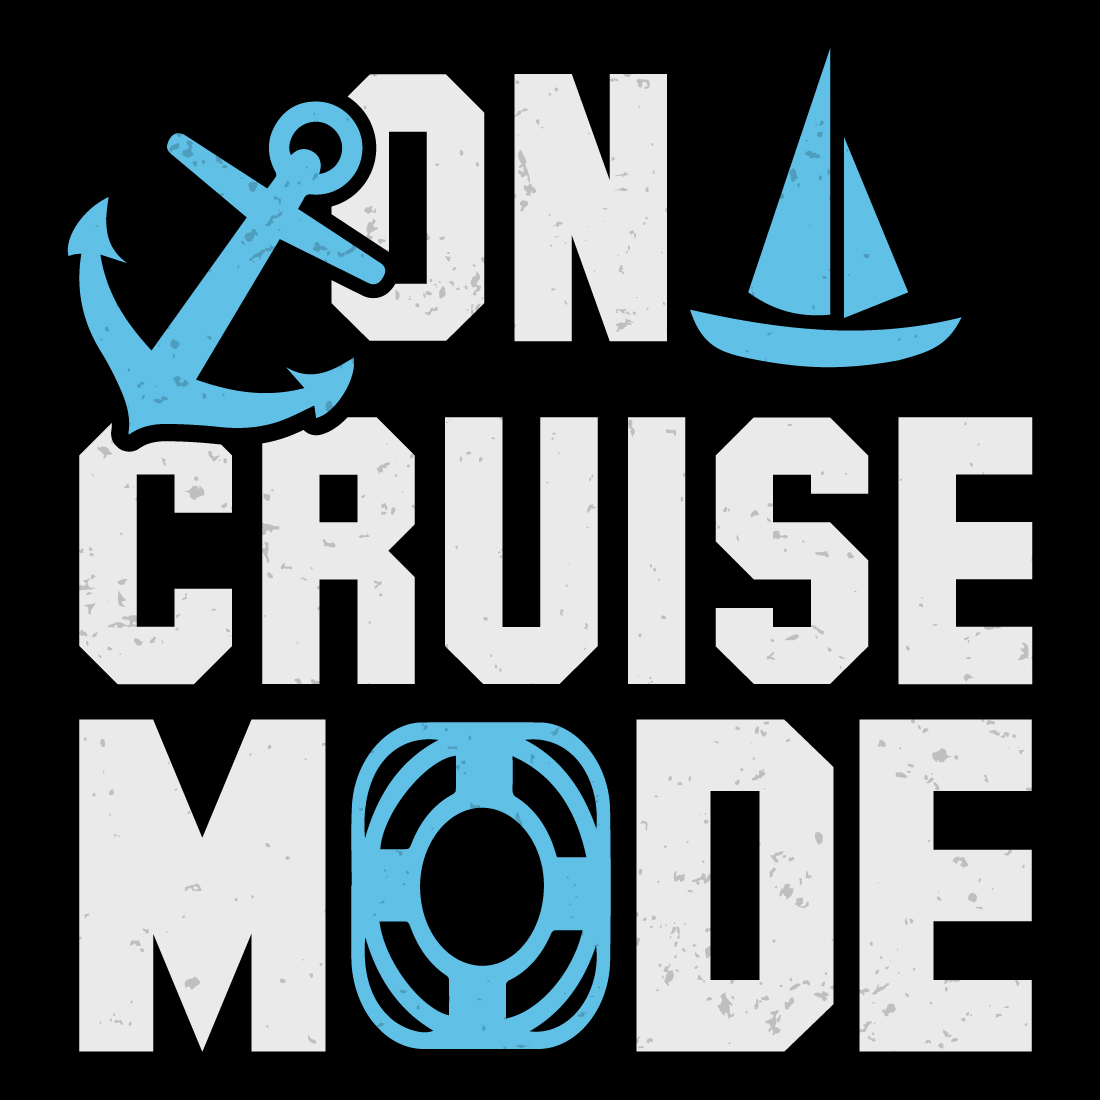 cruise t shirt design bundle cruise t shirt design travel cruise vector illustration silhouette or graphics 4 114